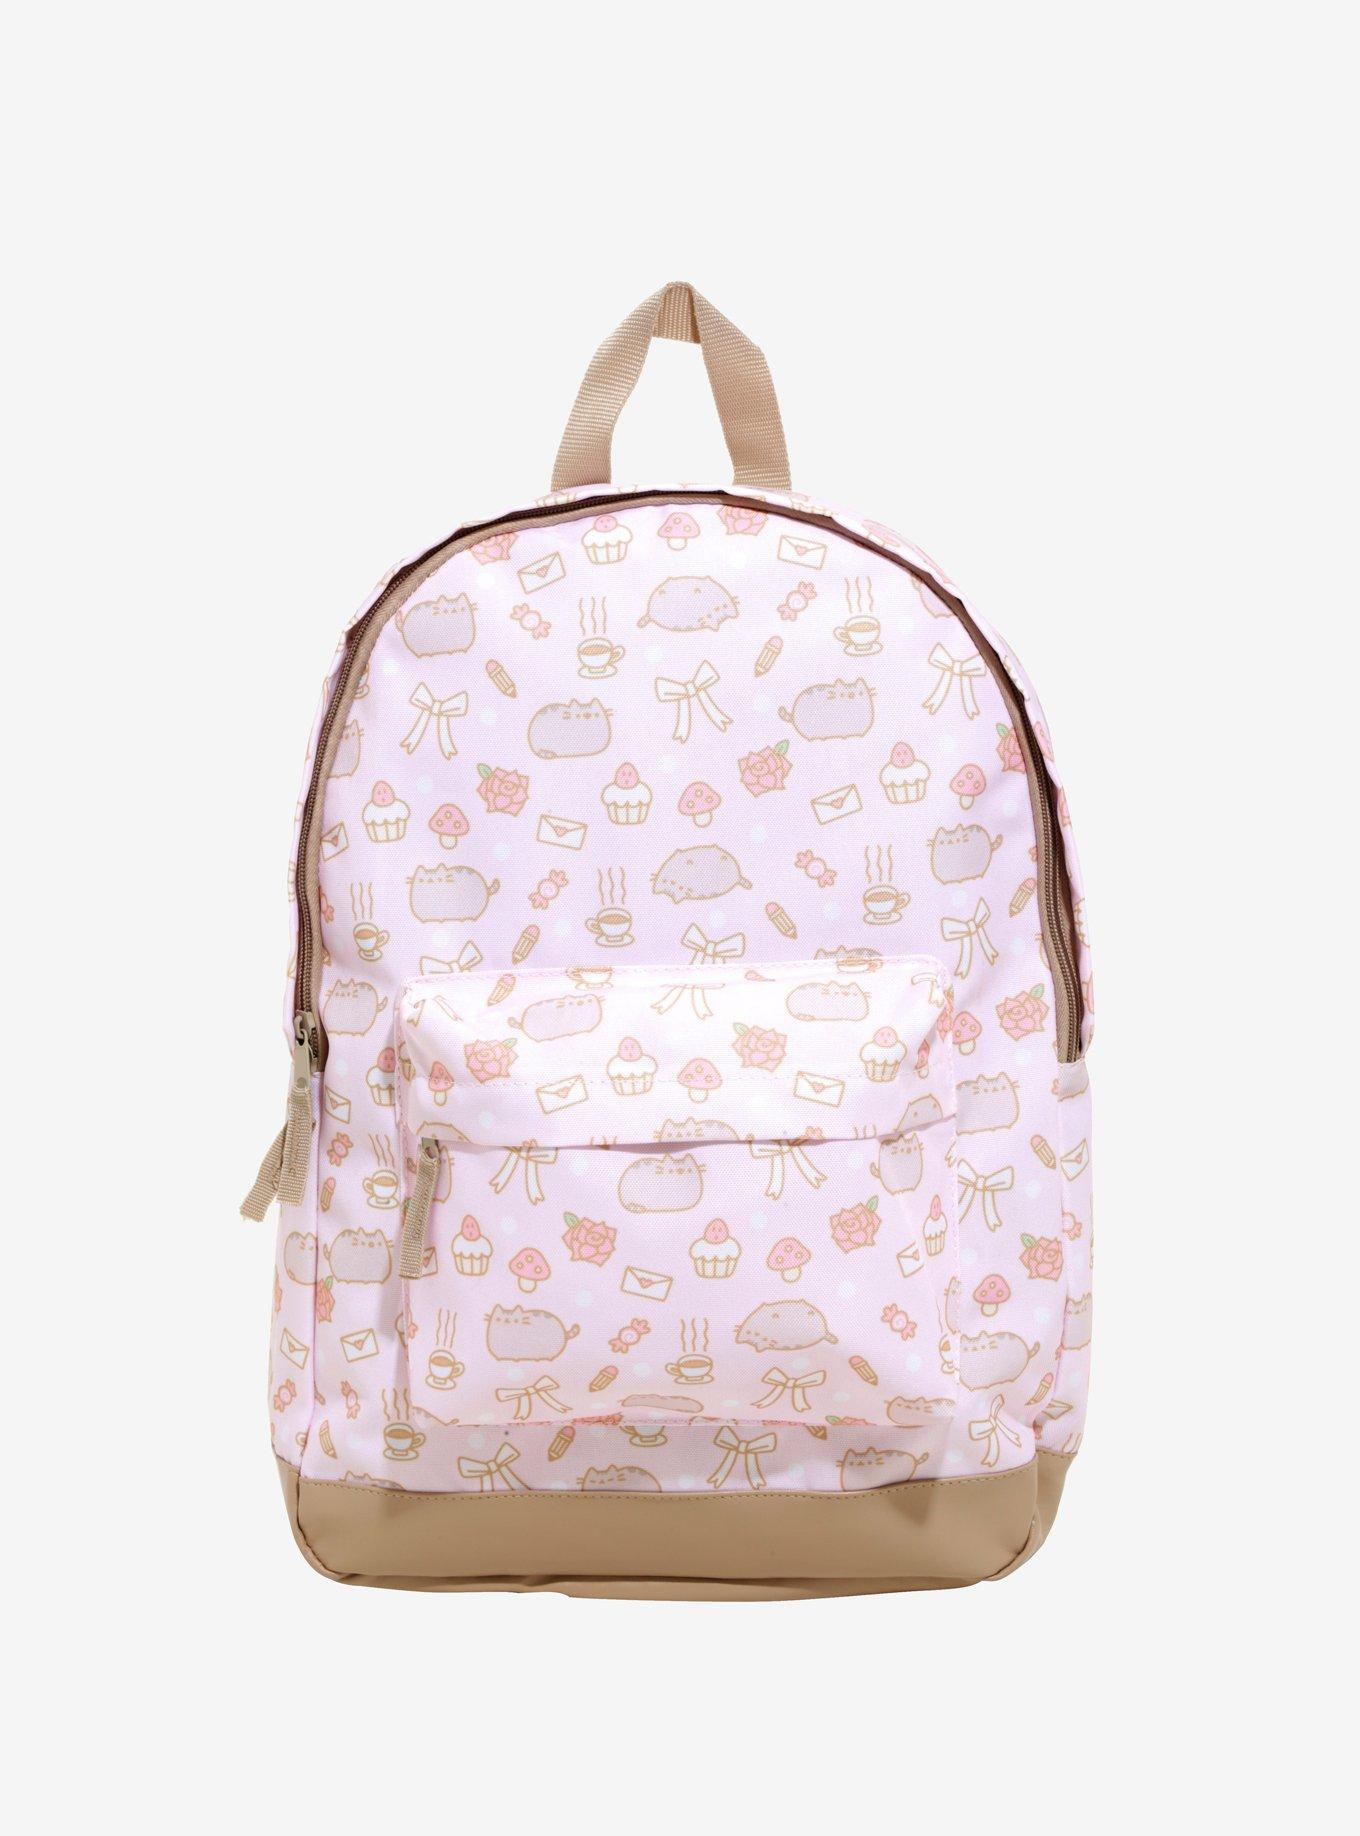 Pusheen Pink Print Backpack, , hi-res